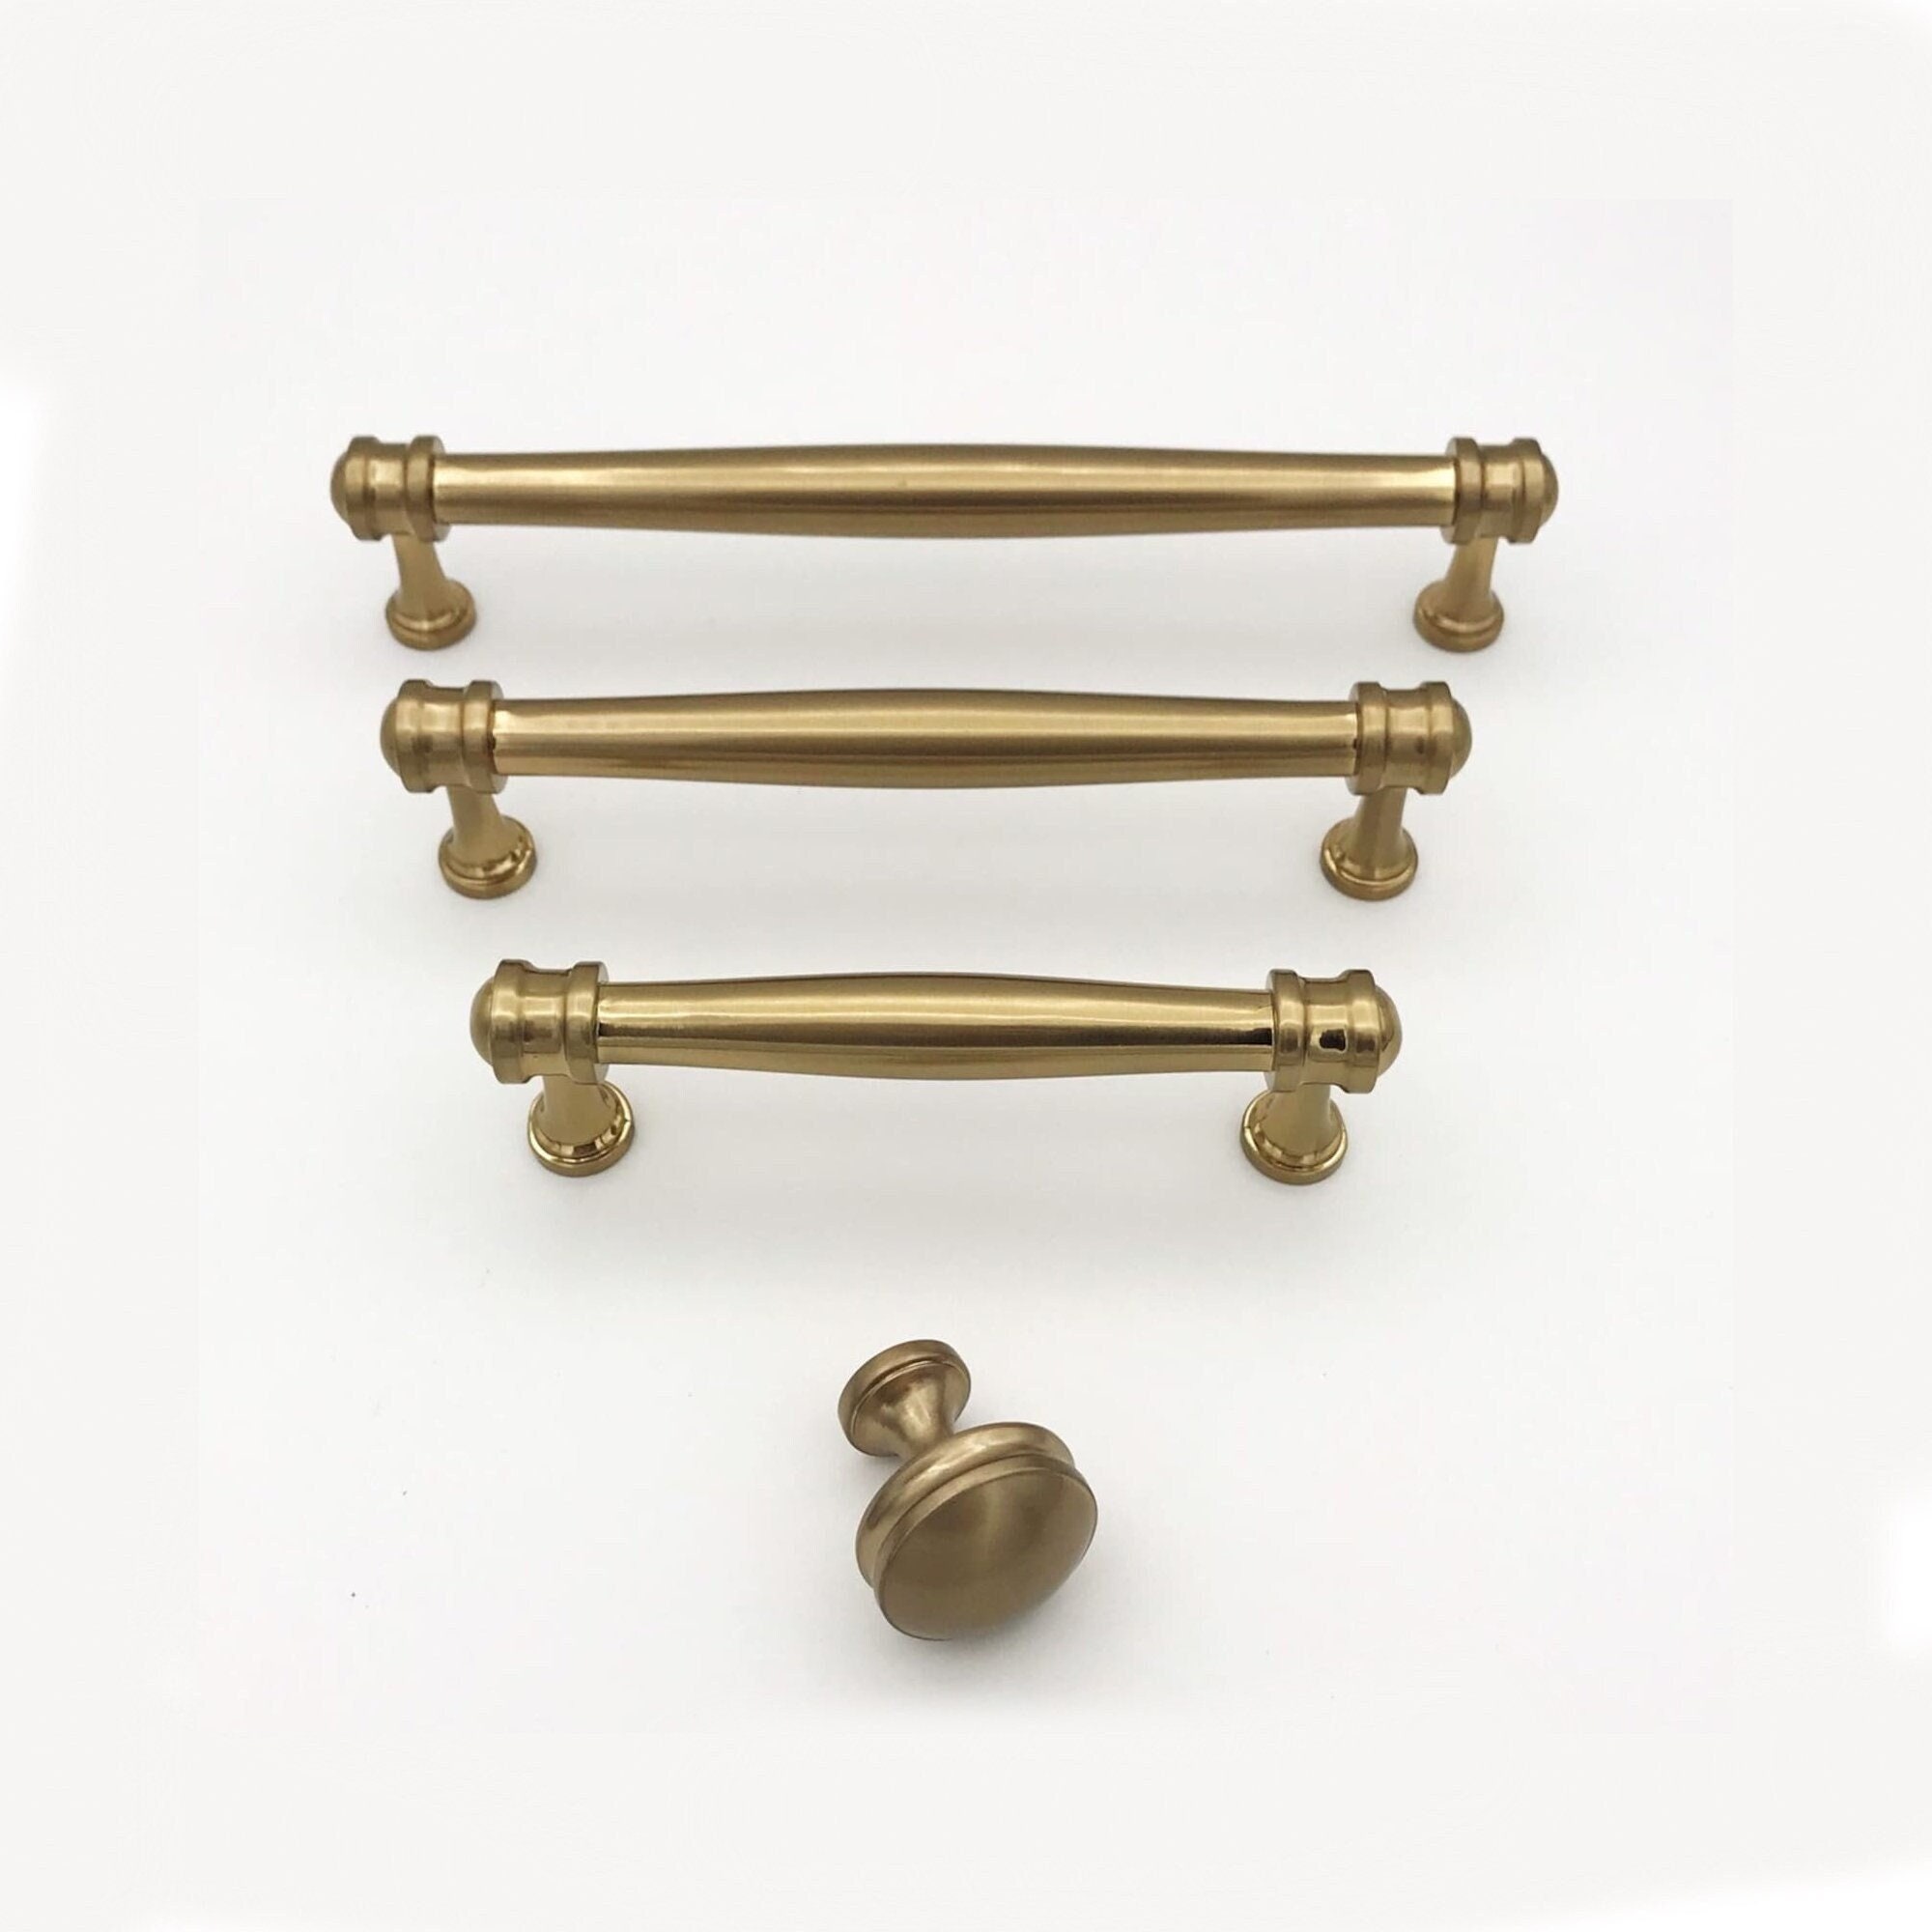 Round Glass and Brass Ball Drawer Cabinet Knob – Forge Hardware Studio